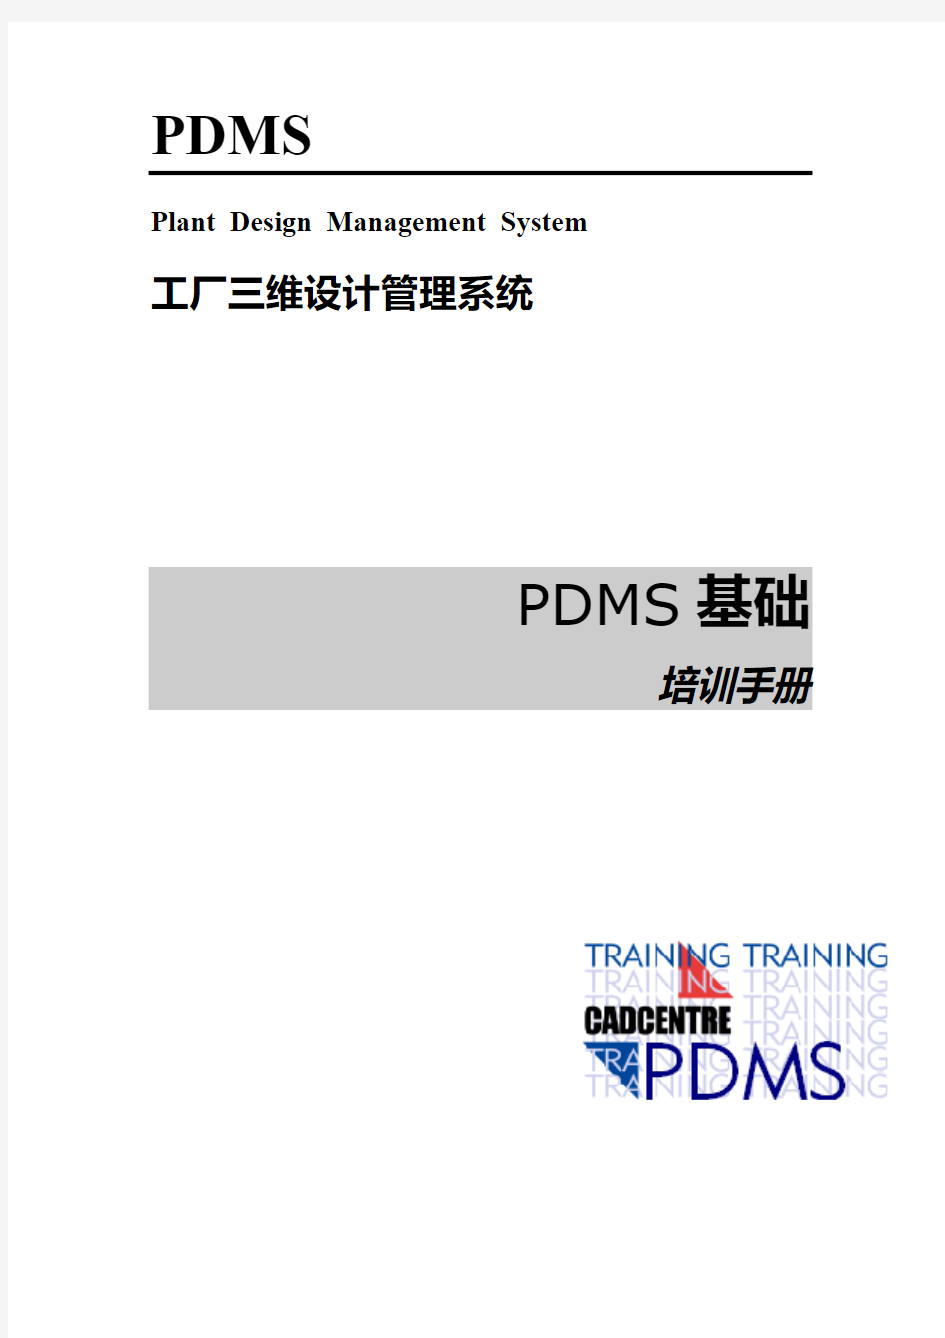 PDMS中文教材